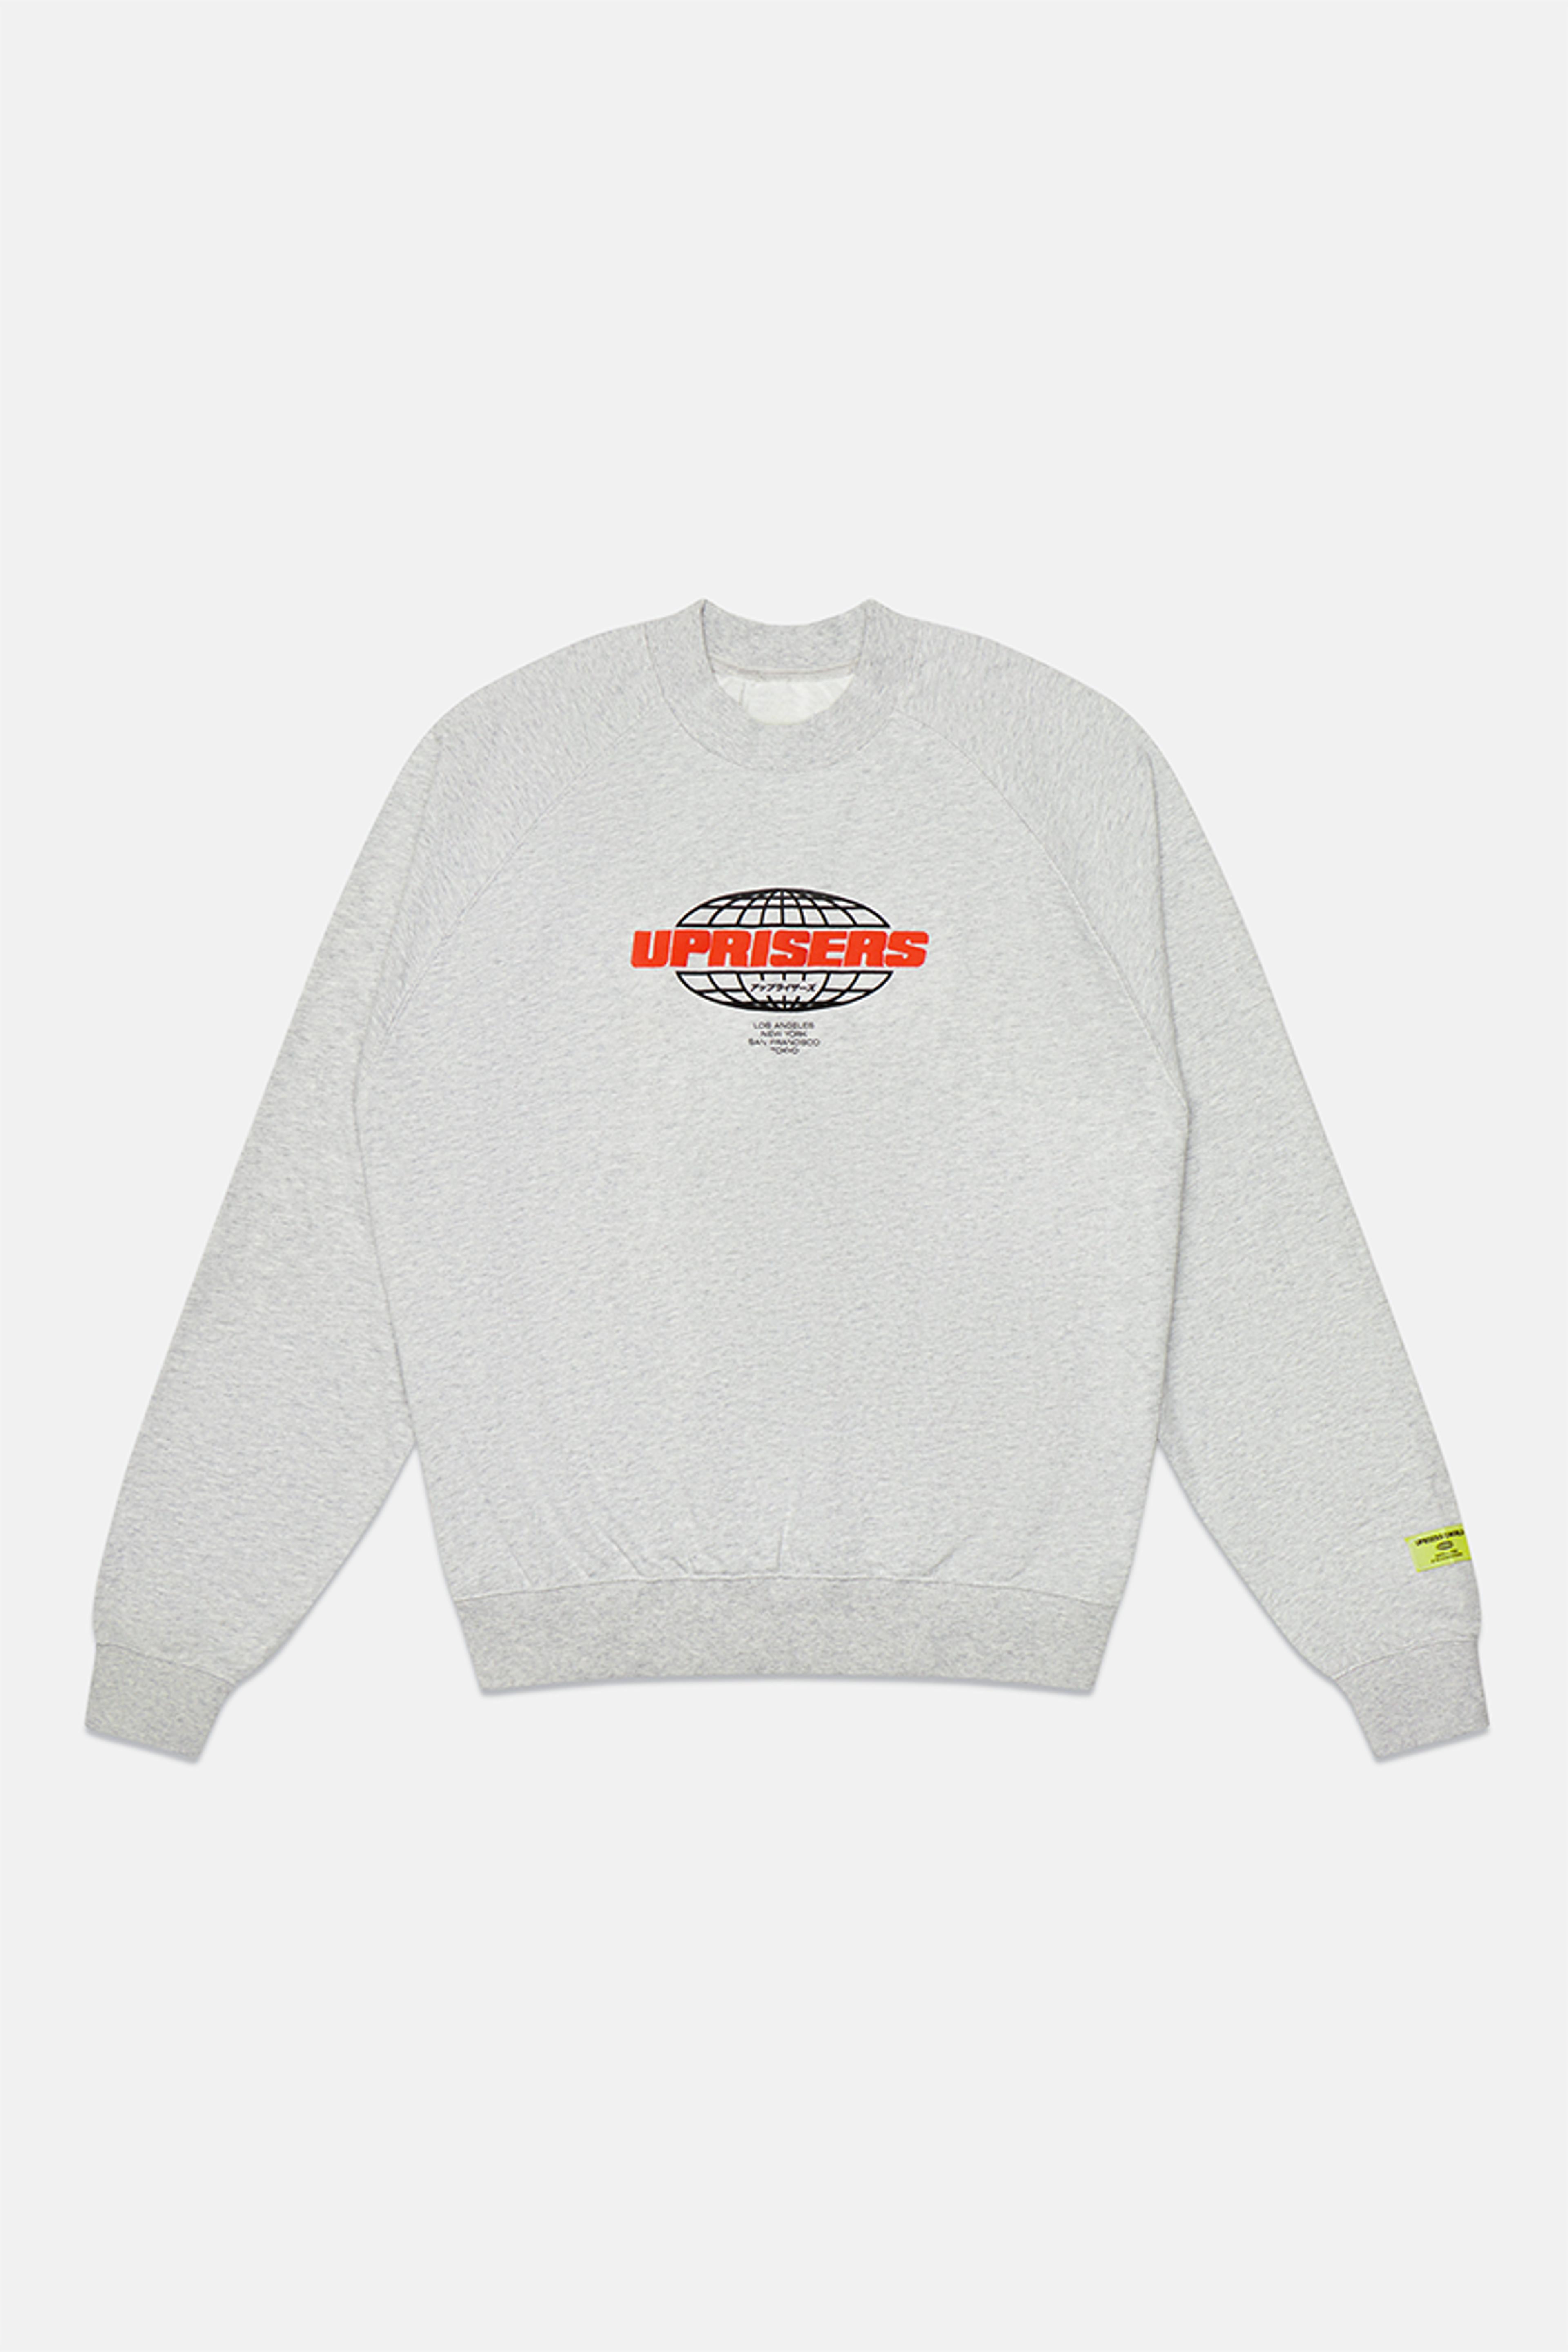 Uprisers.World Original Grey Crewneck Sweatshirt